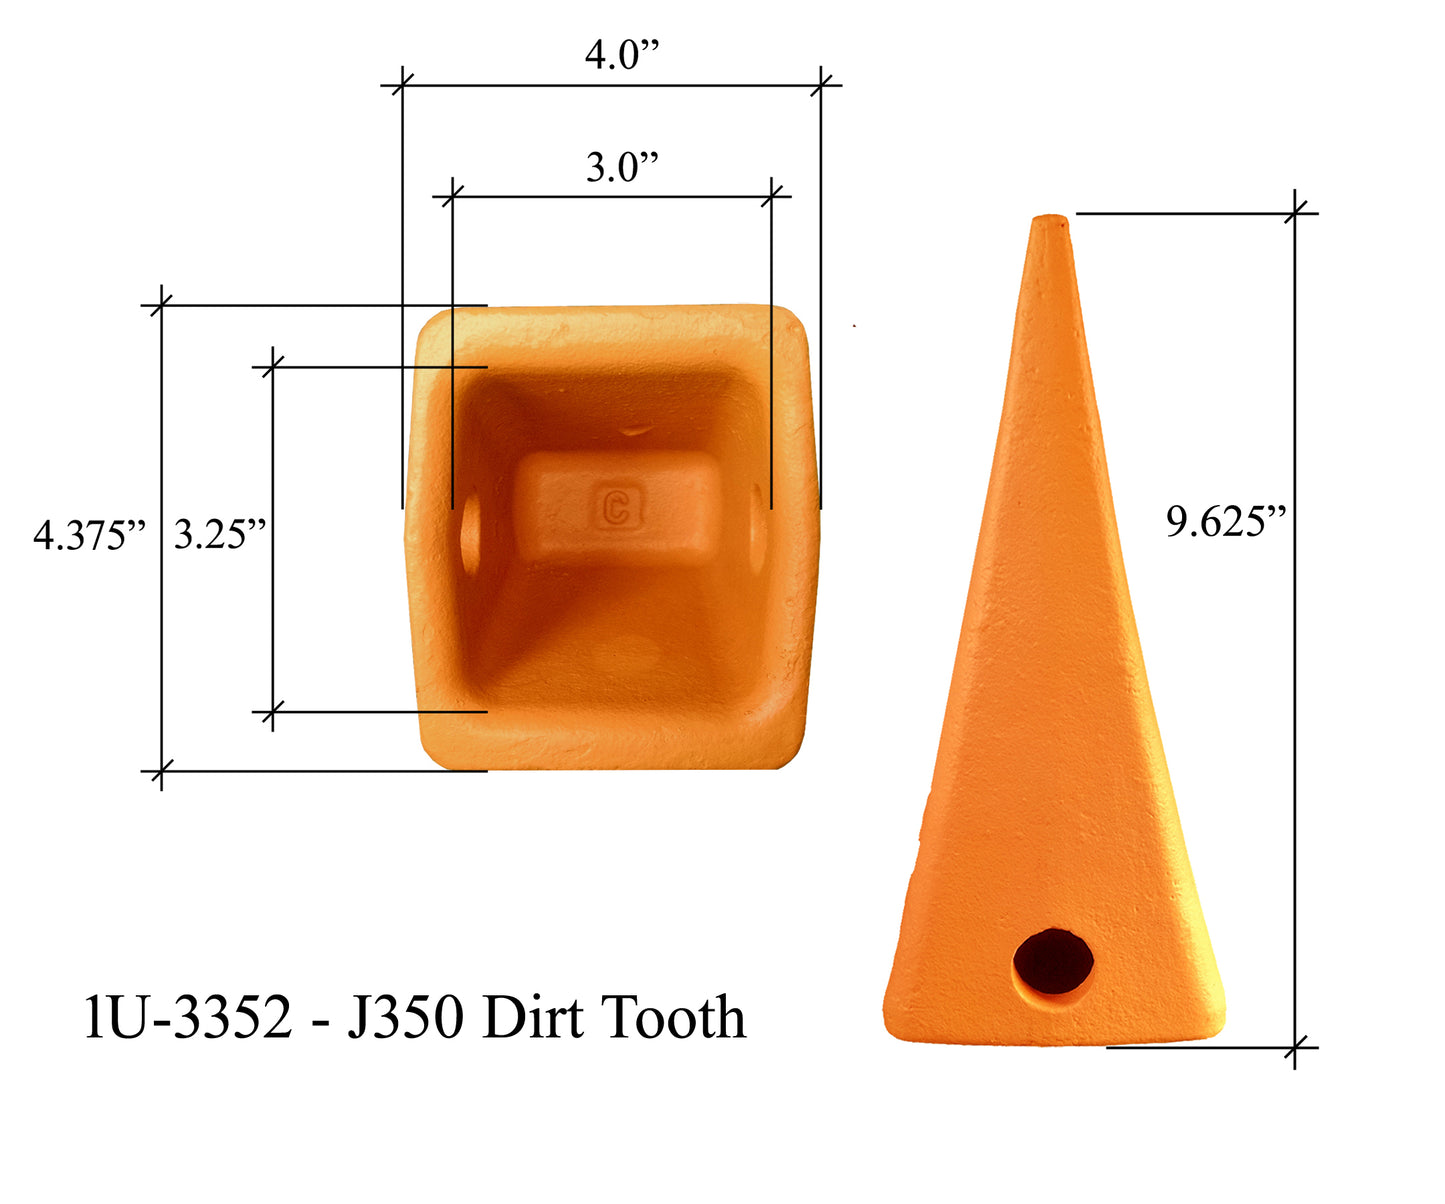 1U-3352 Standard Dirt Tooth - 'Cat Style' J350 Series